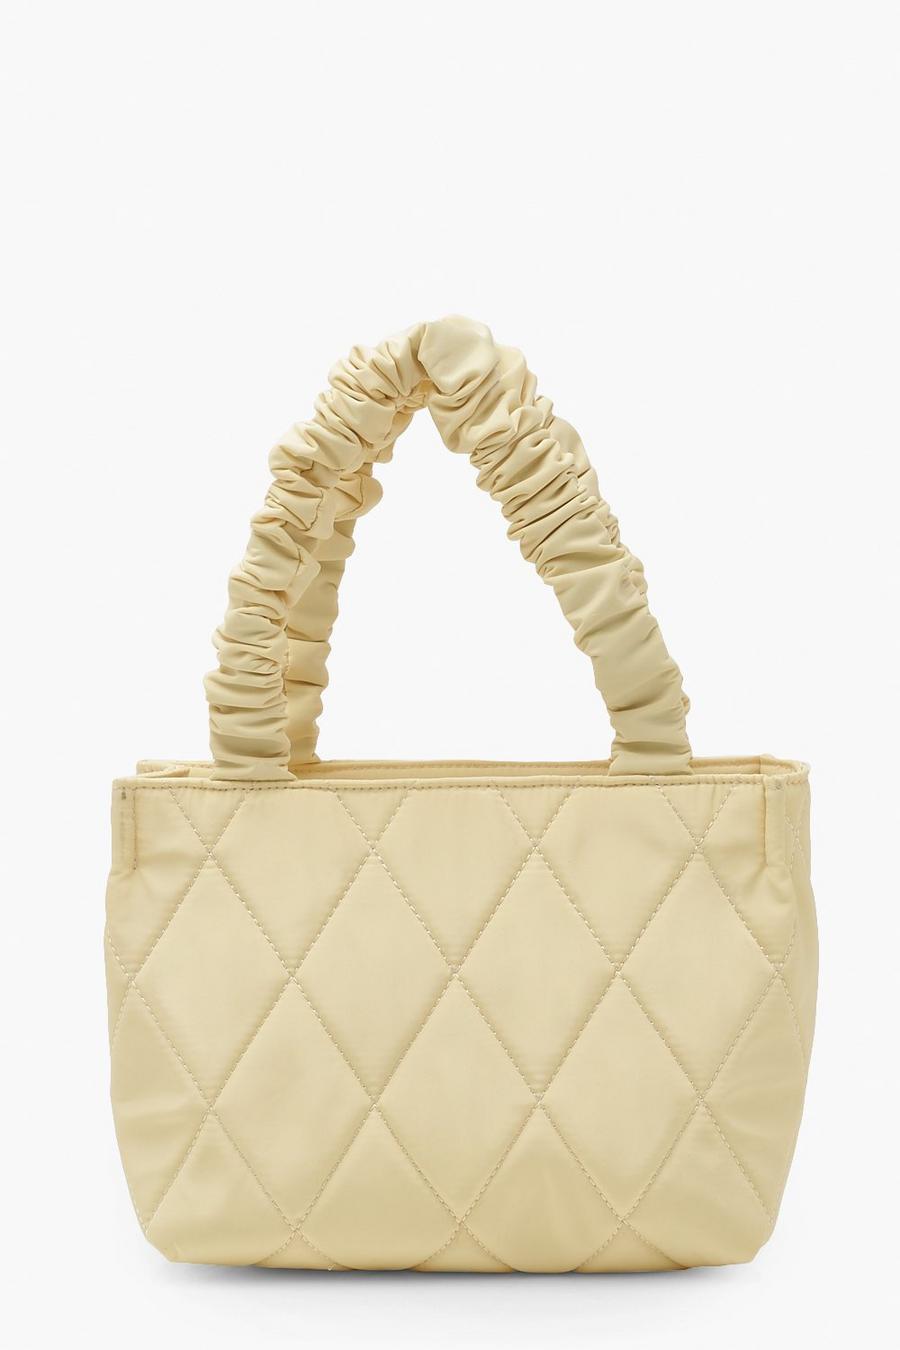 Zara - Quilted Shopper Bag - Yellow - Women